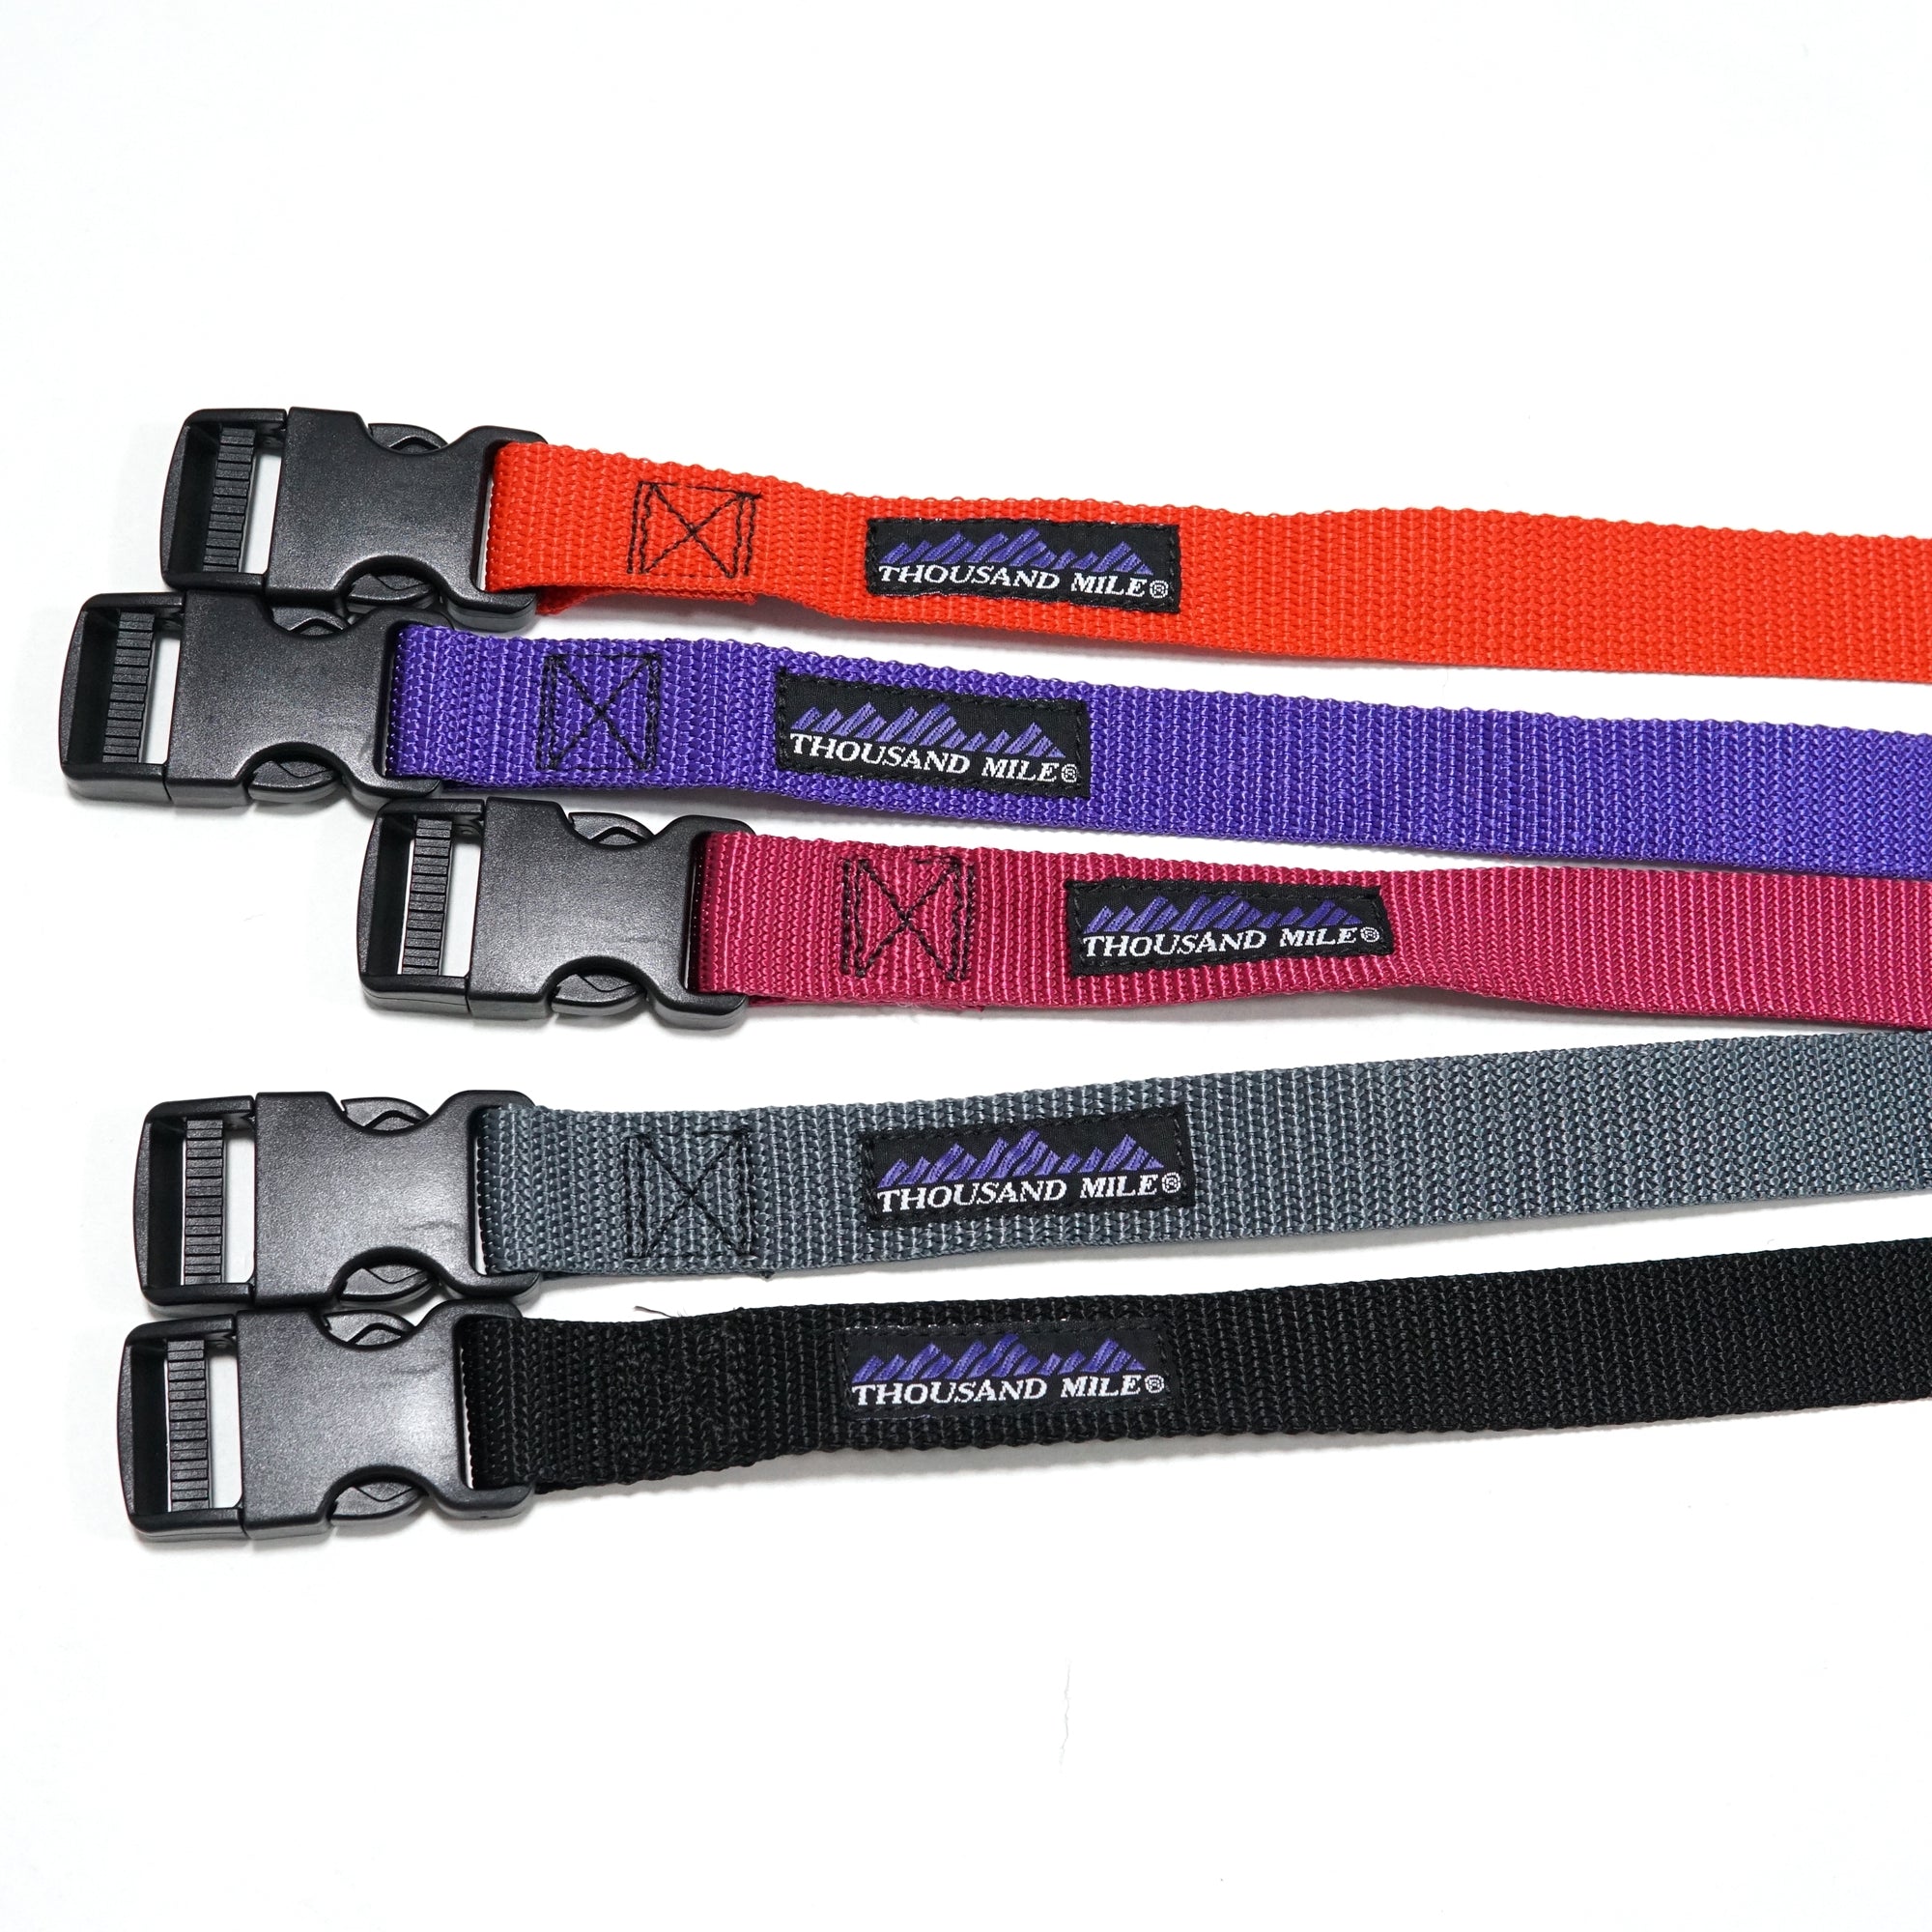 Side release belt サイドリリースベルト SOLID Color:5 Colors【THOUSAND MILE_サウザンドマイル】【ネコポス選択可能】